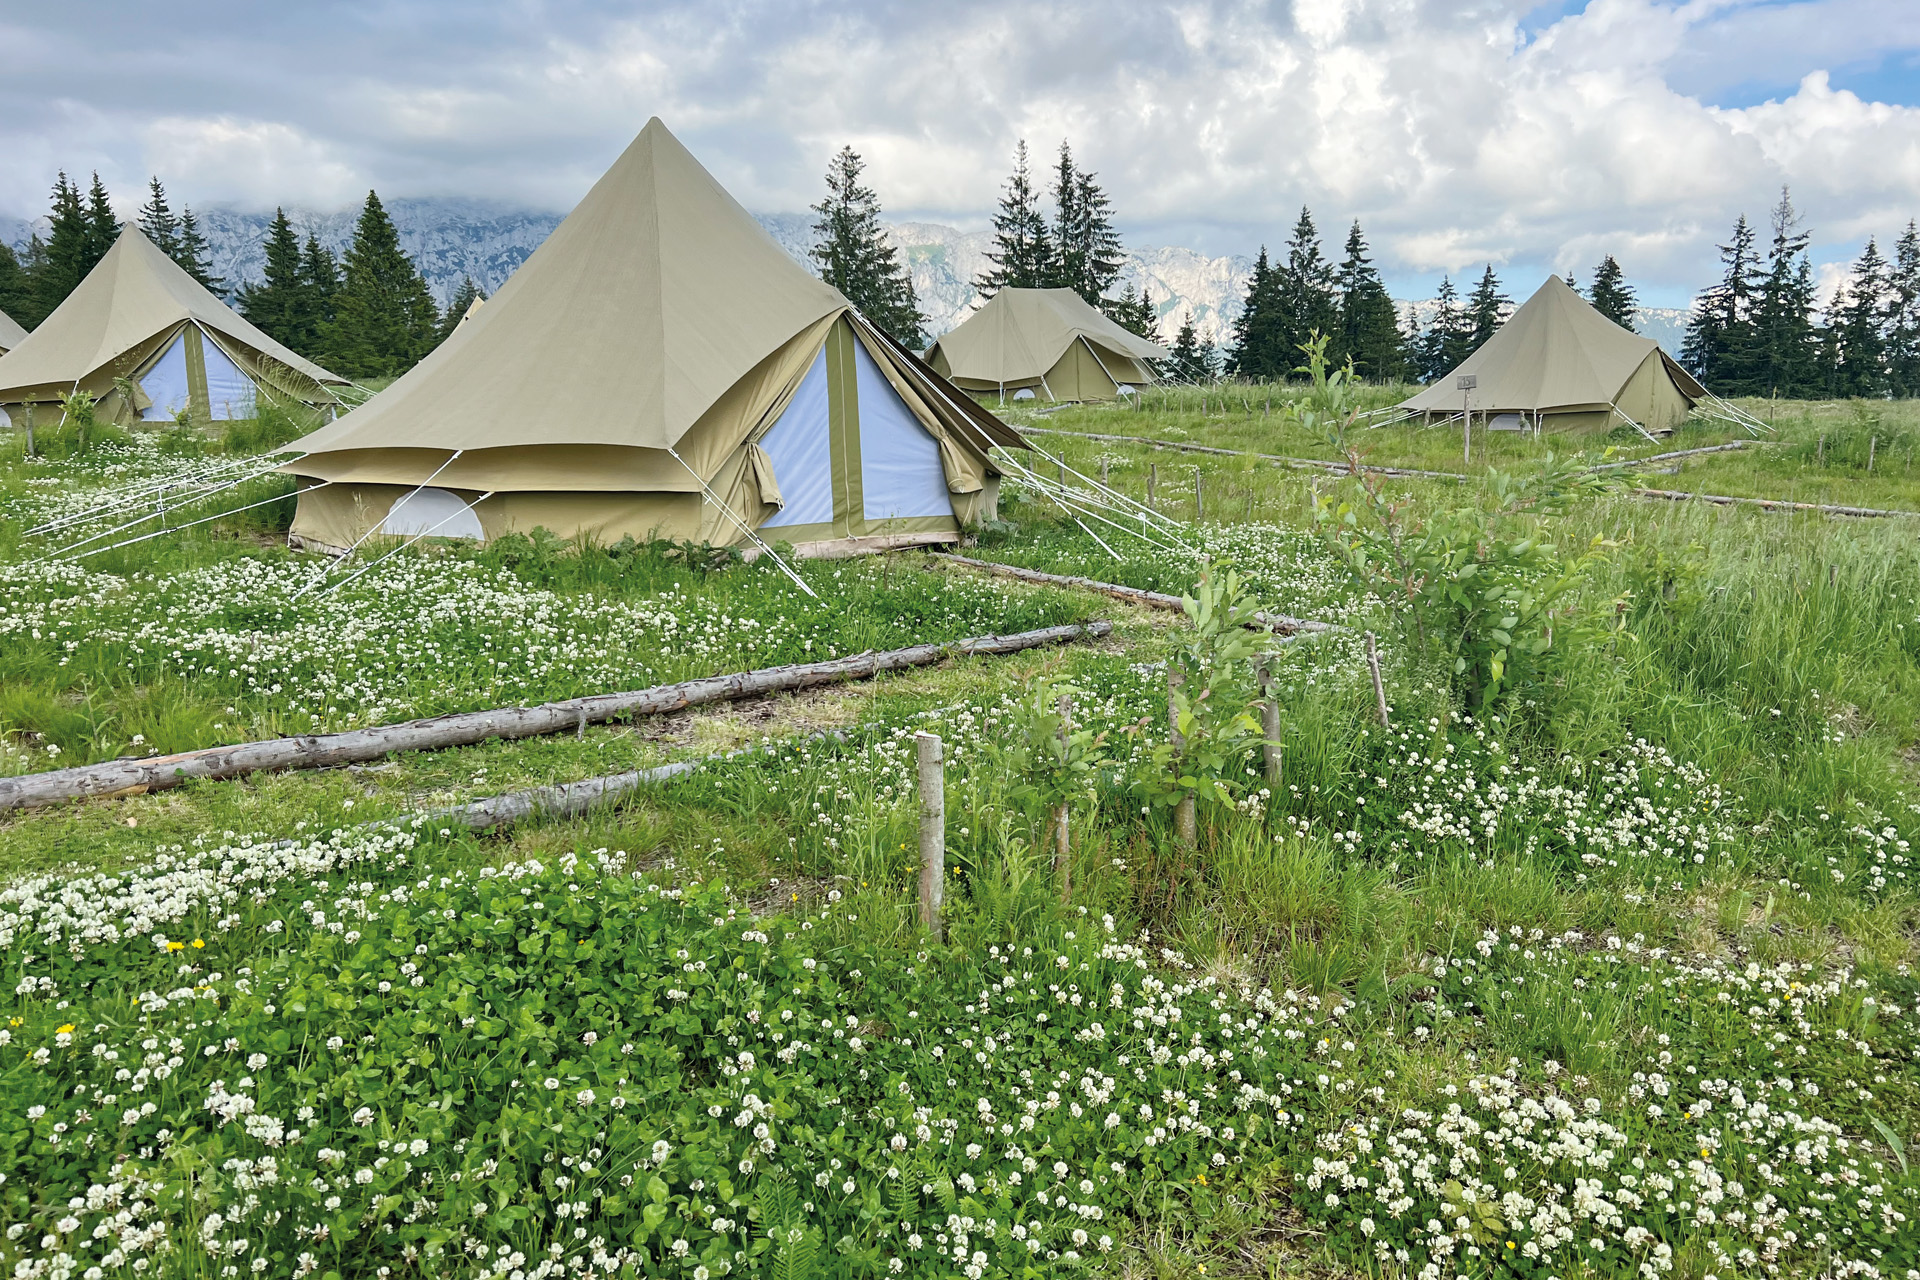 Tents for glamping set against the limestone escarpment